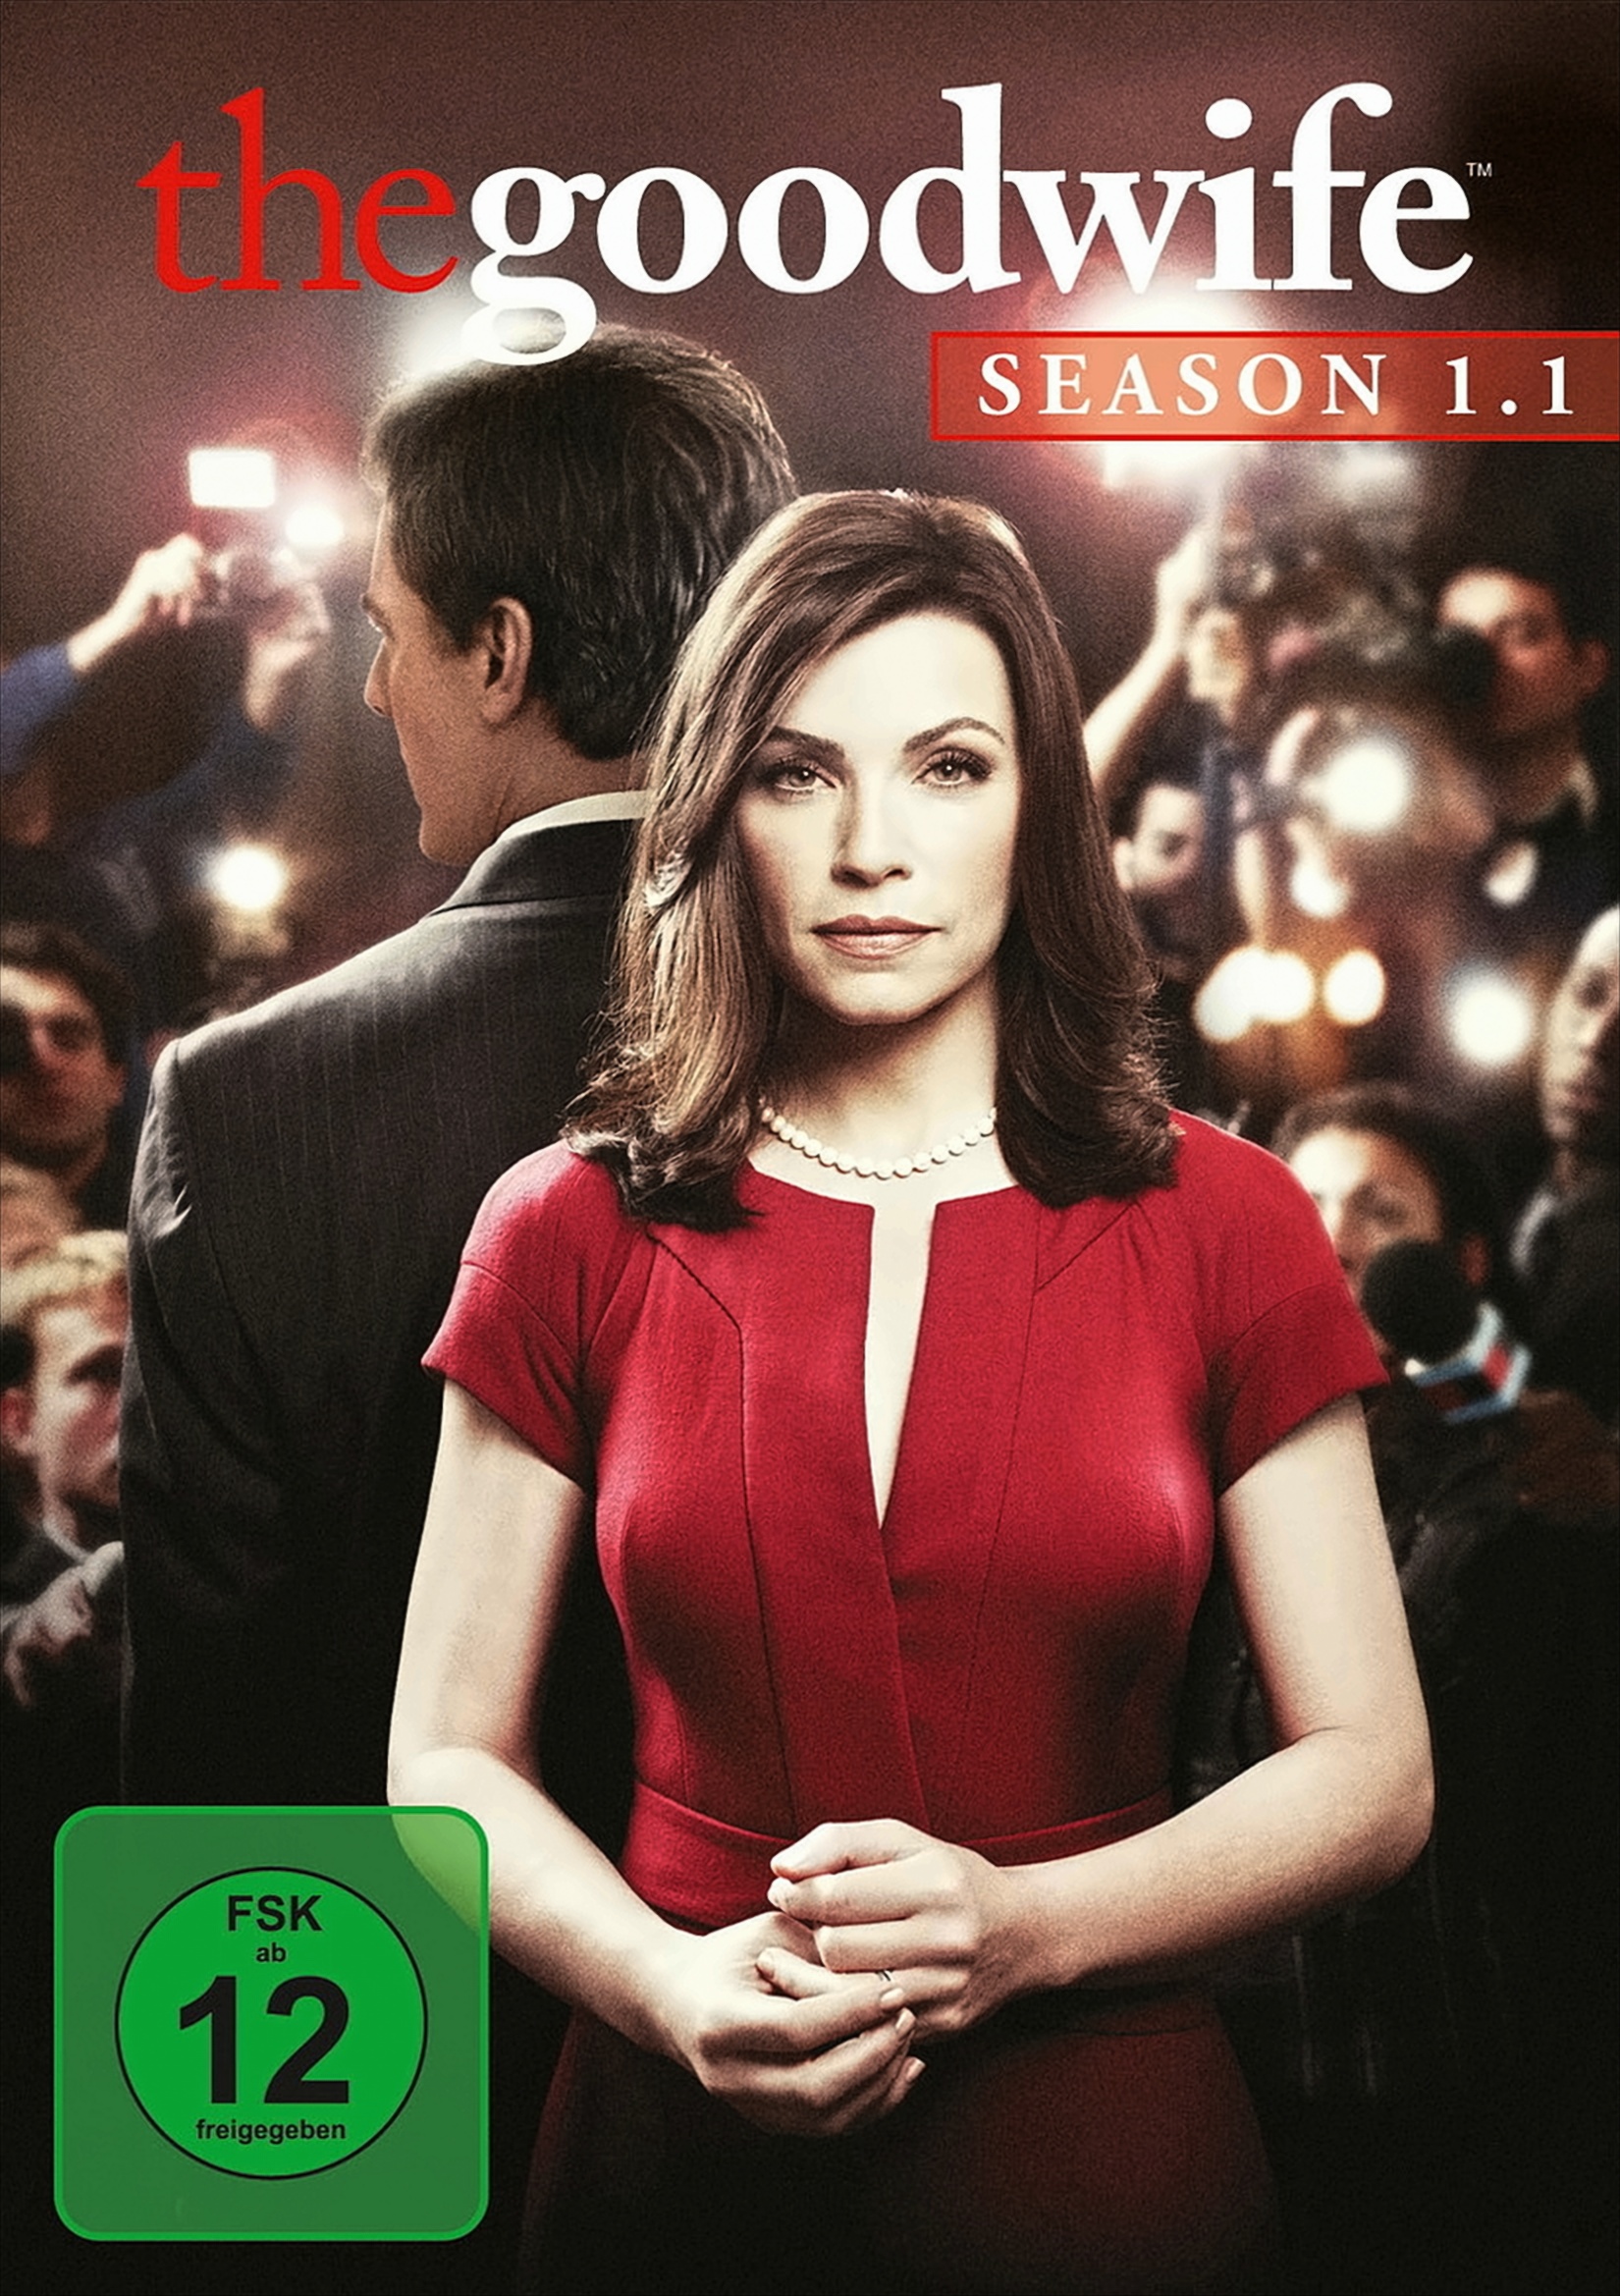 The Good Wife - Season 1.1 (3 Discs) von Universal Pictures